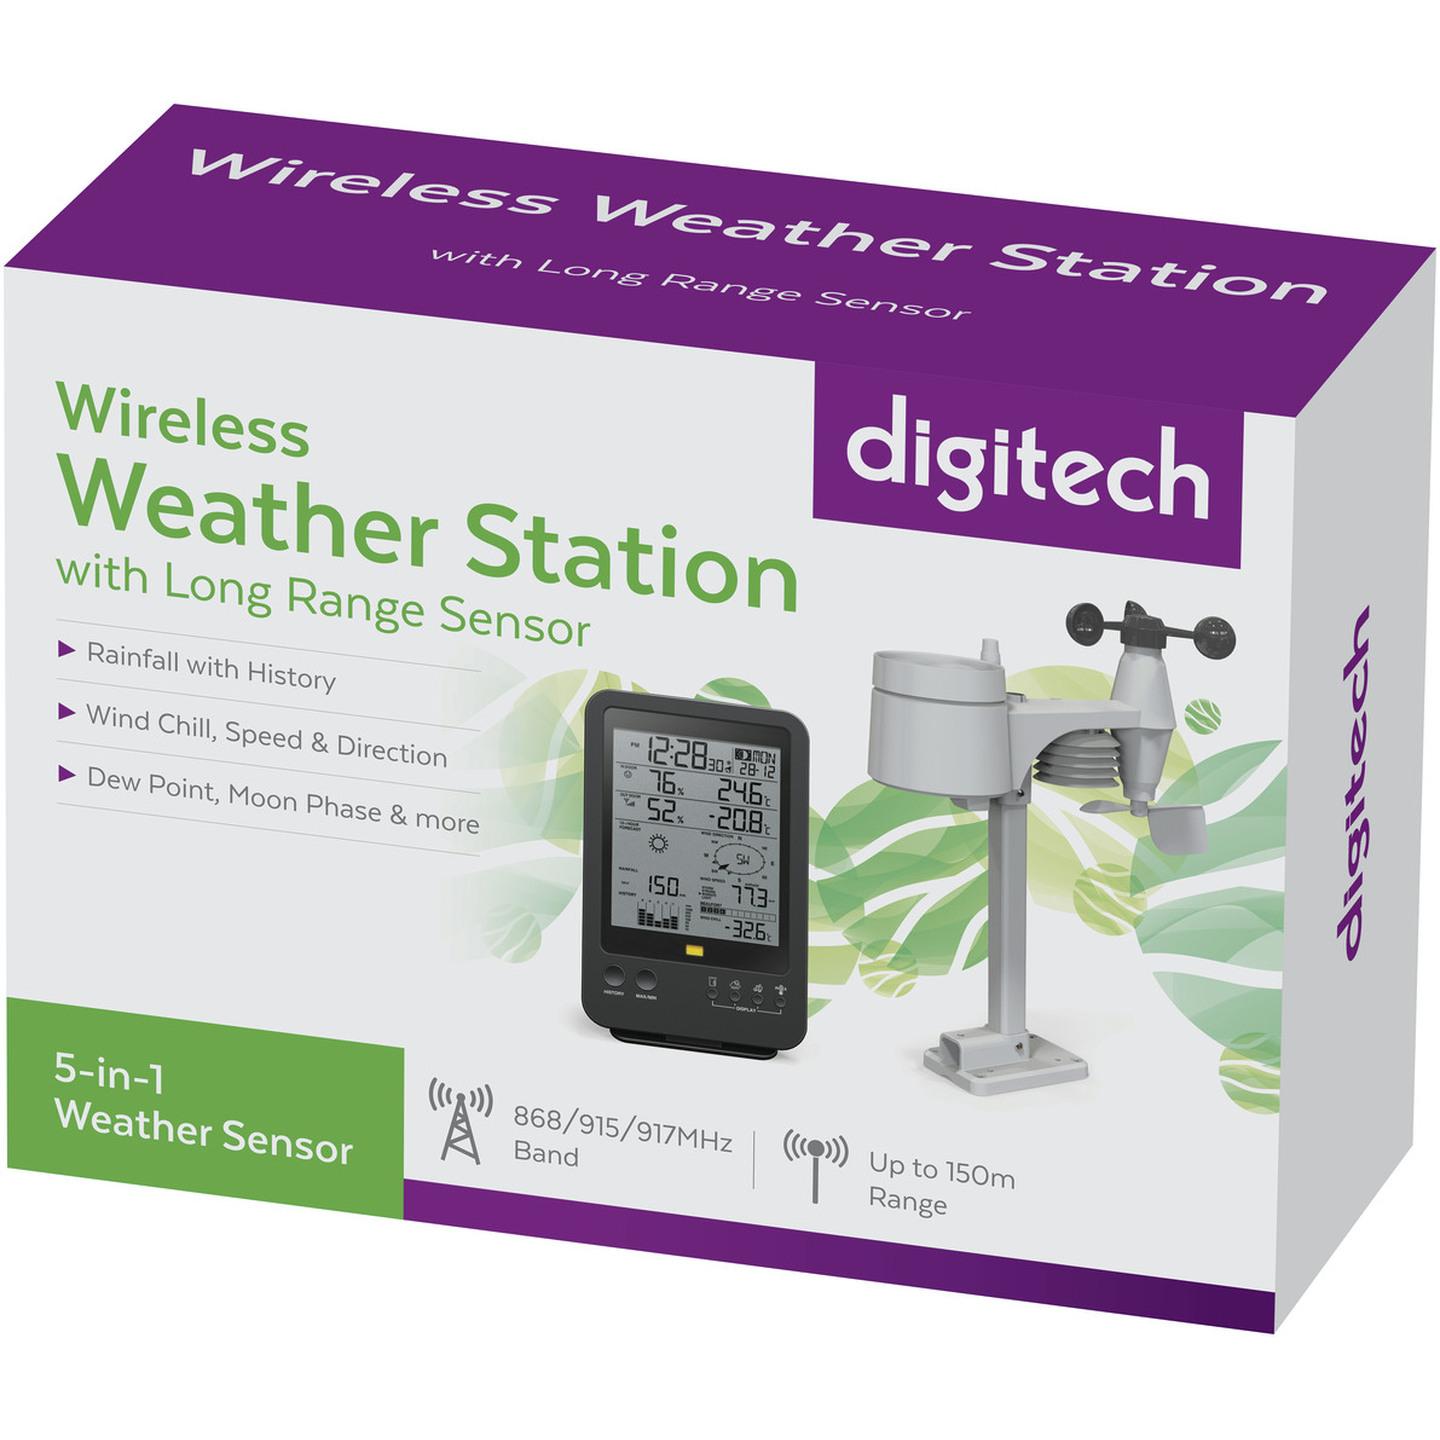 Digital Weather Station with Monochrome Display